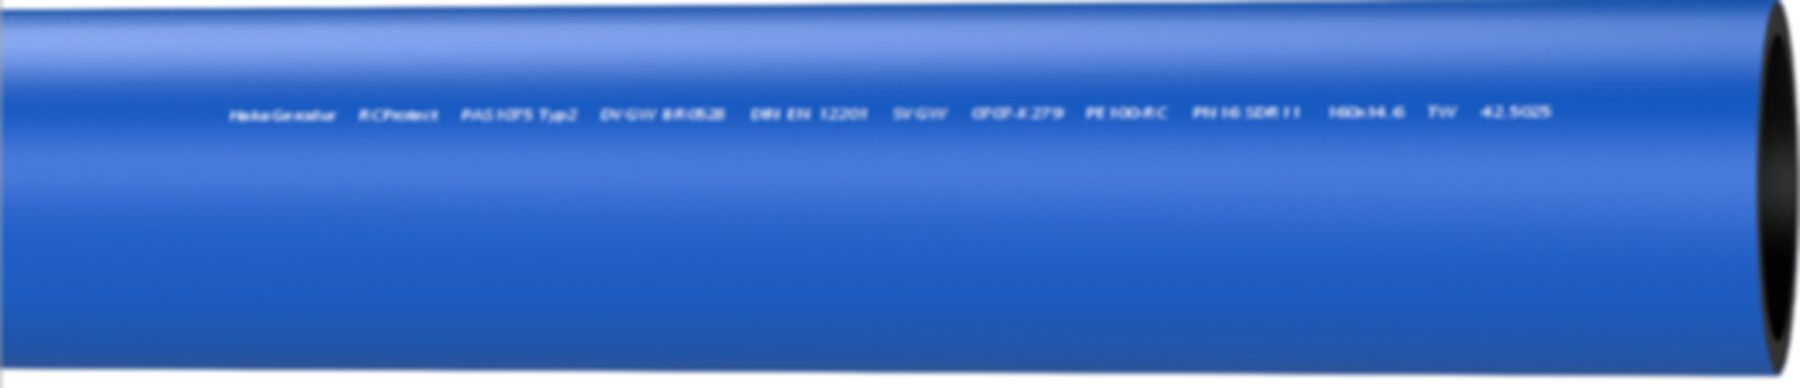 Druckrohr Wasser PE 100RC, SDR 17, PN 10 d 450 x 26.7mm - RCprotect in Stangen